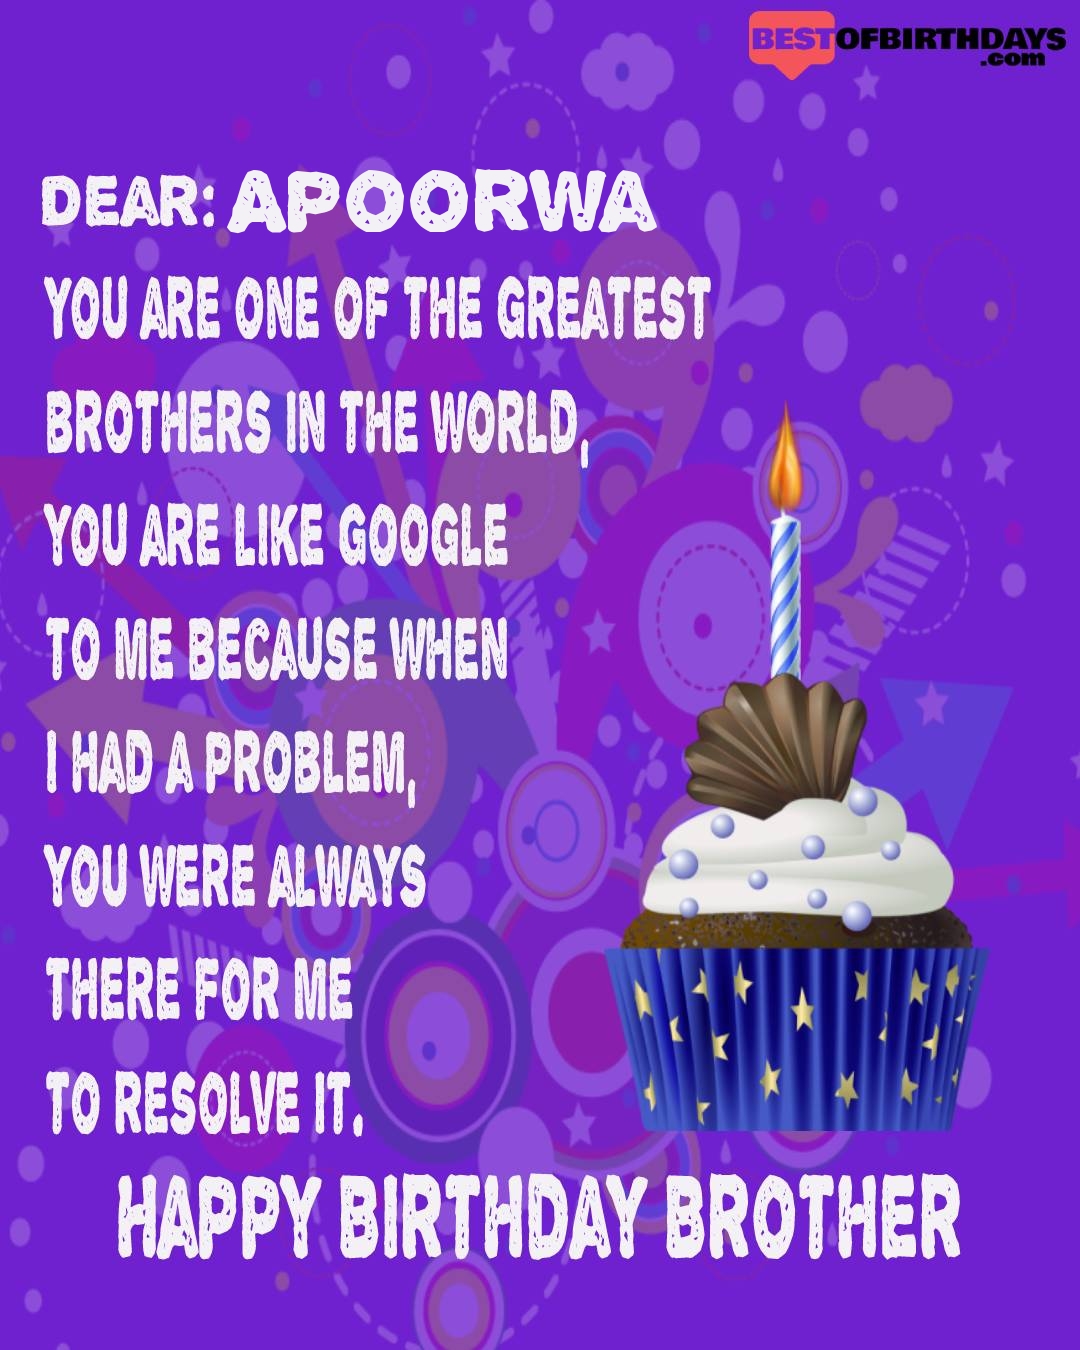 Happy birthday apoorwa bhai brother bro